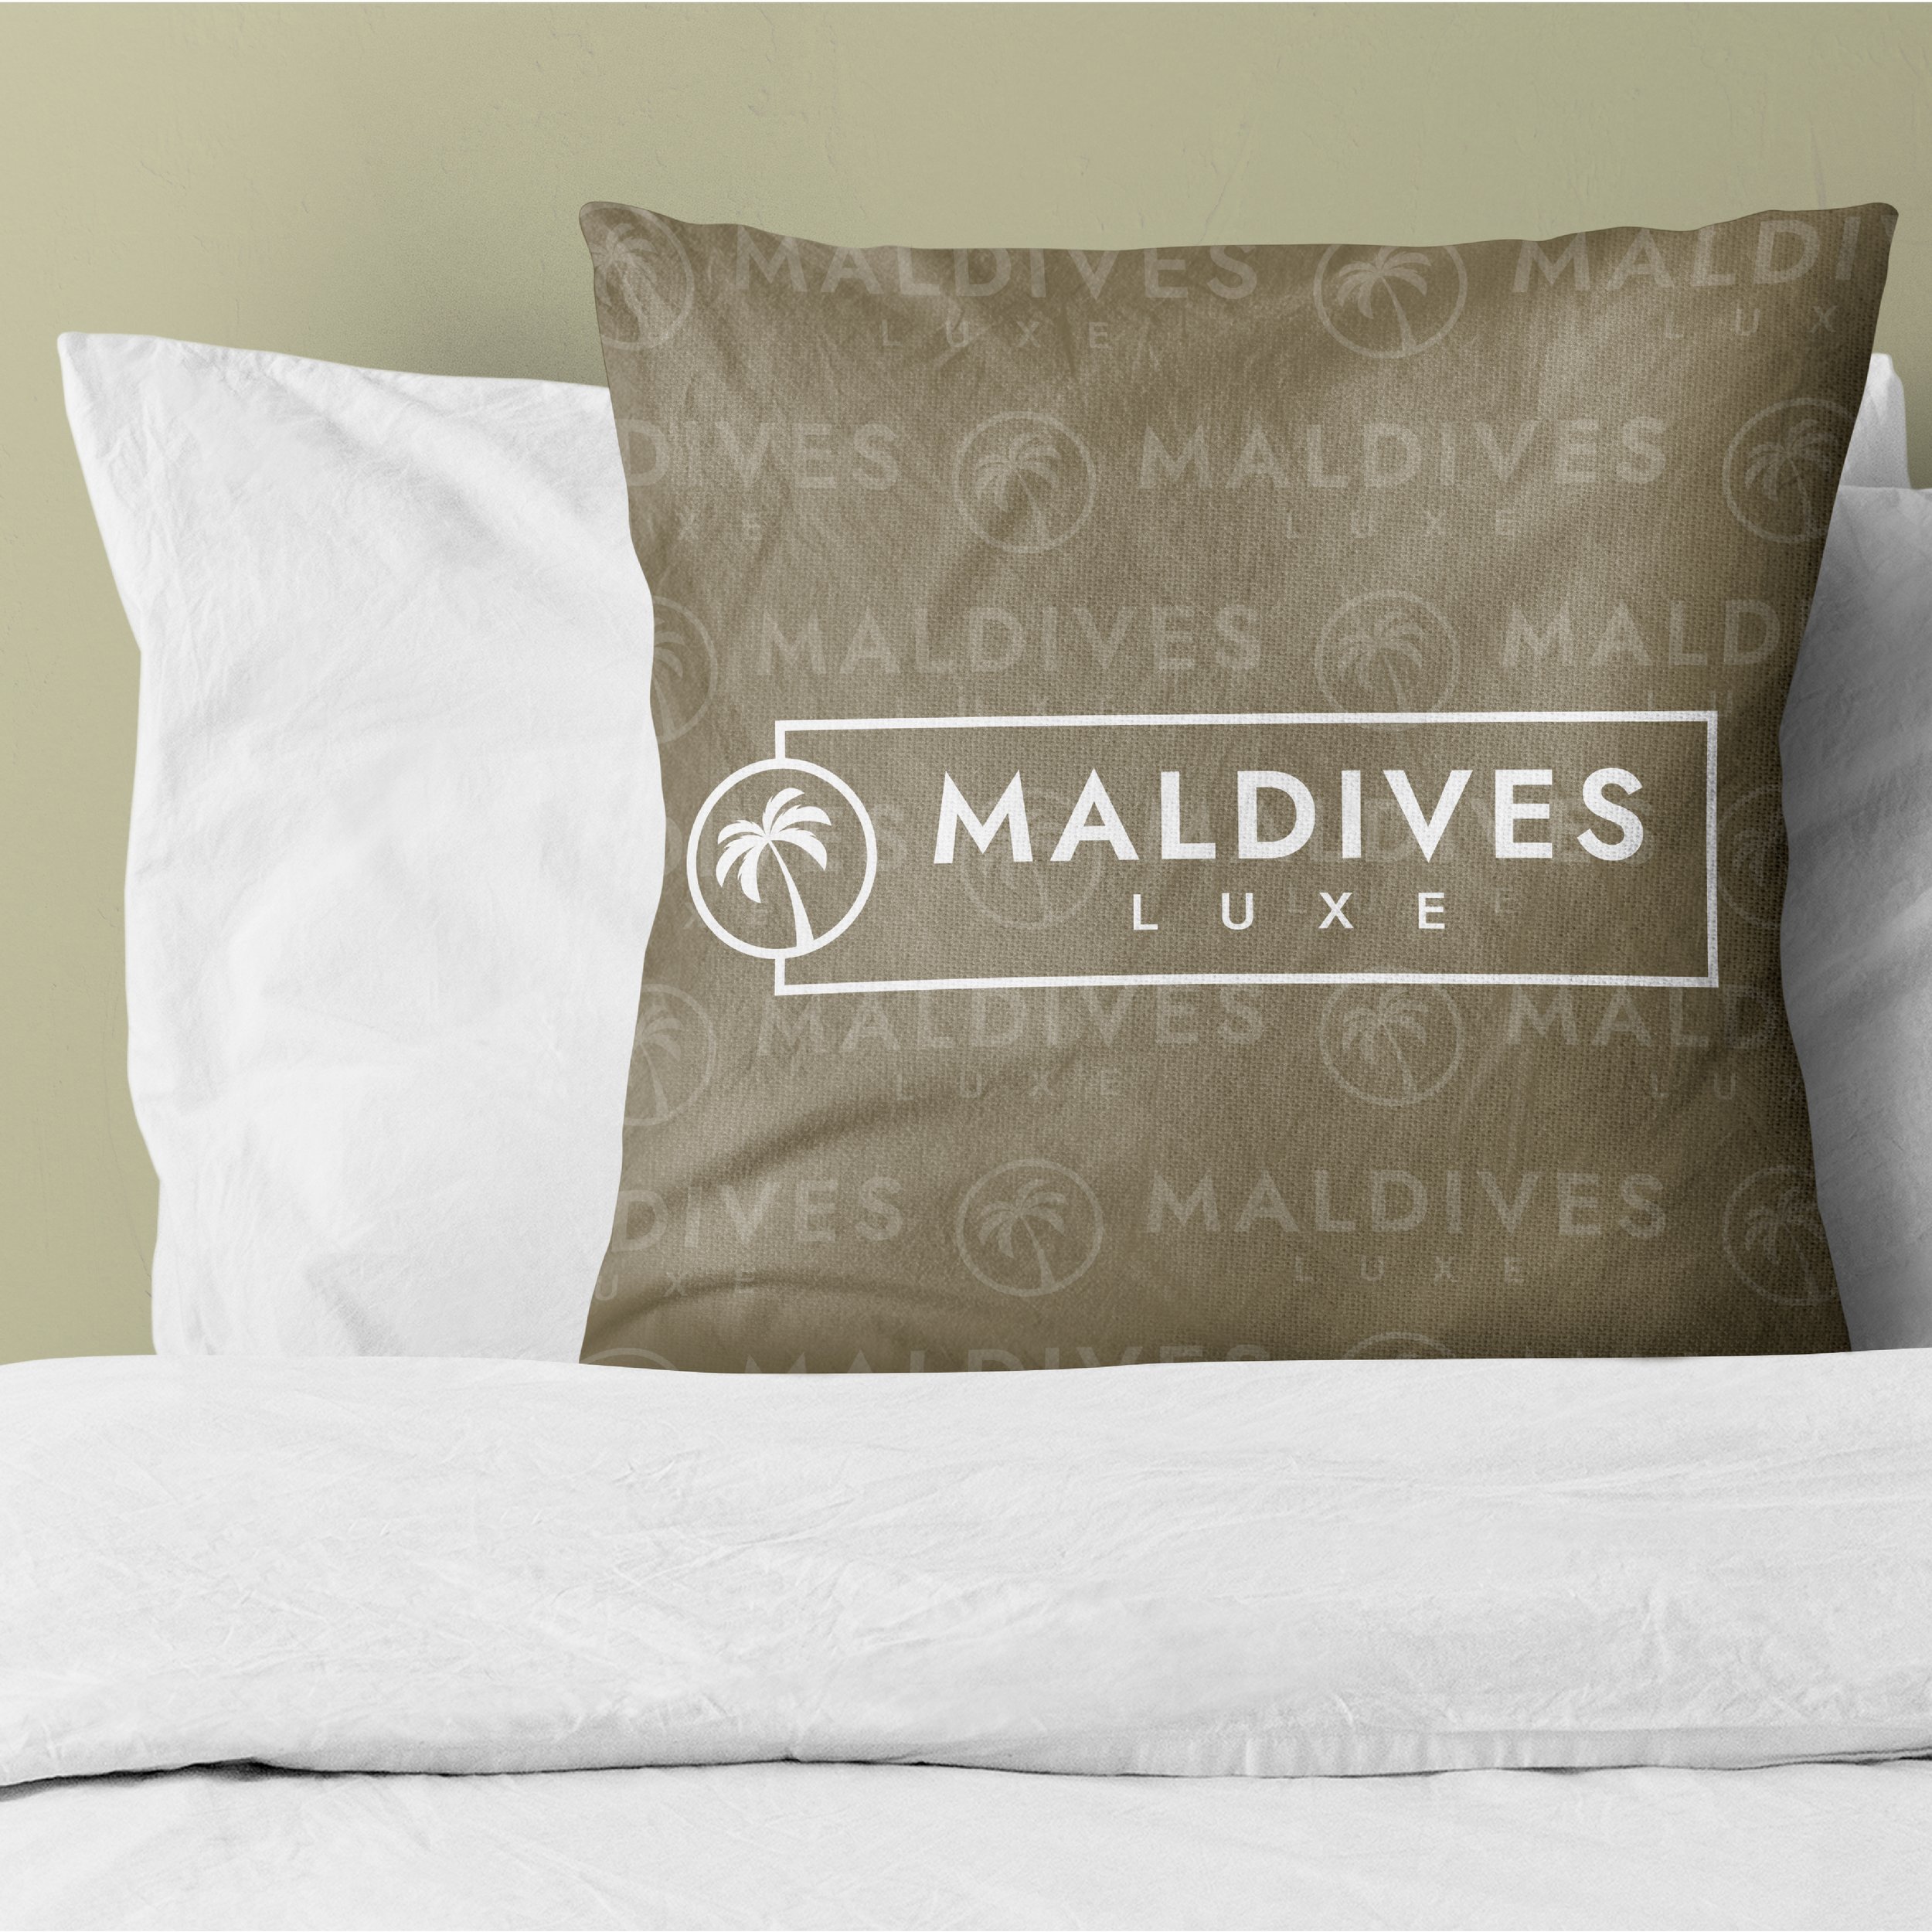 Maldives Luxe-06.jpg